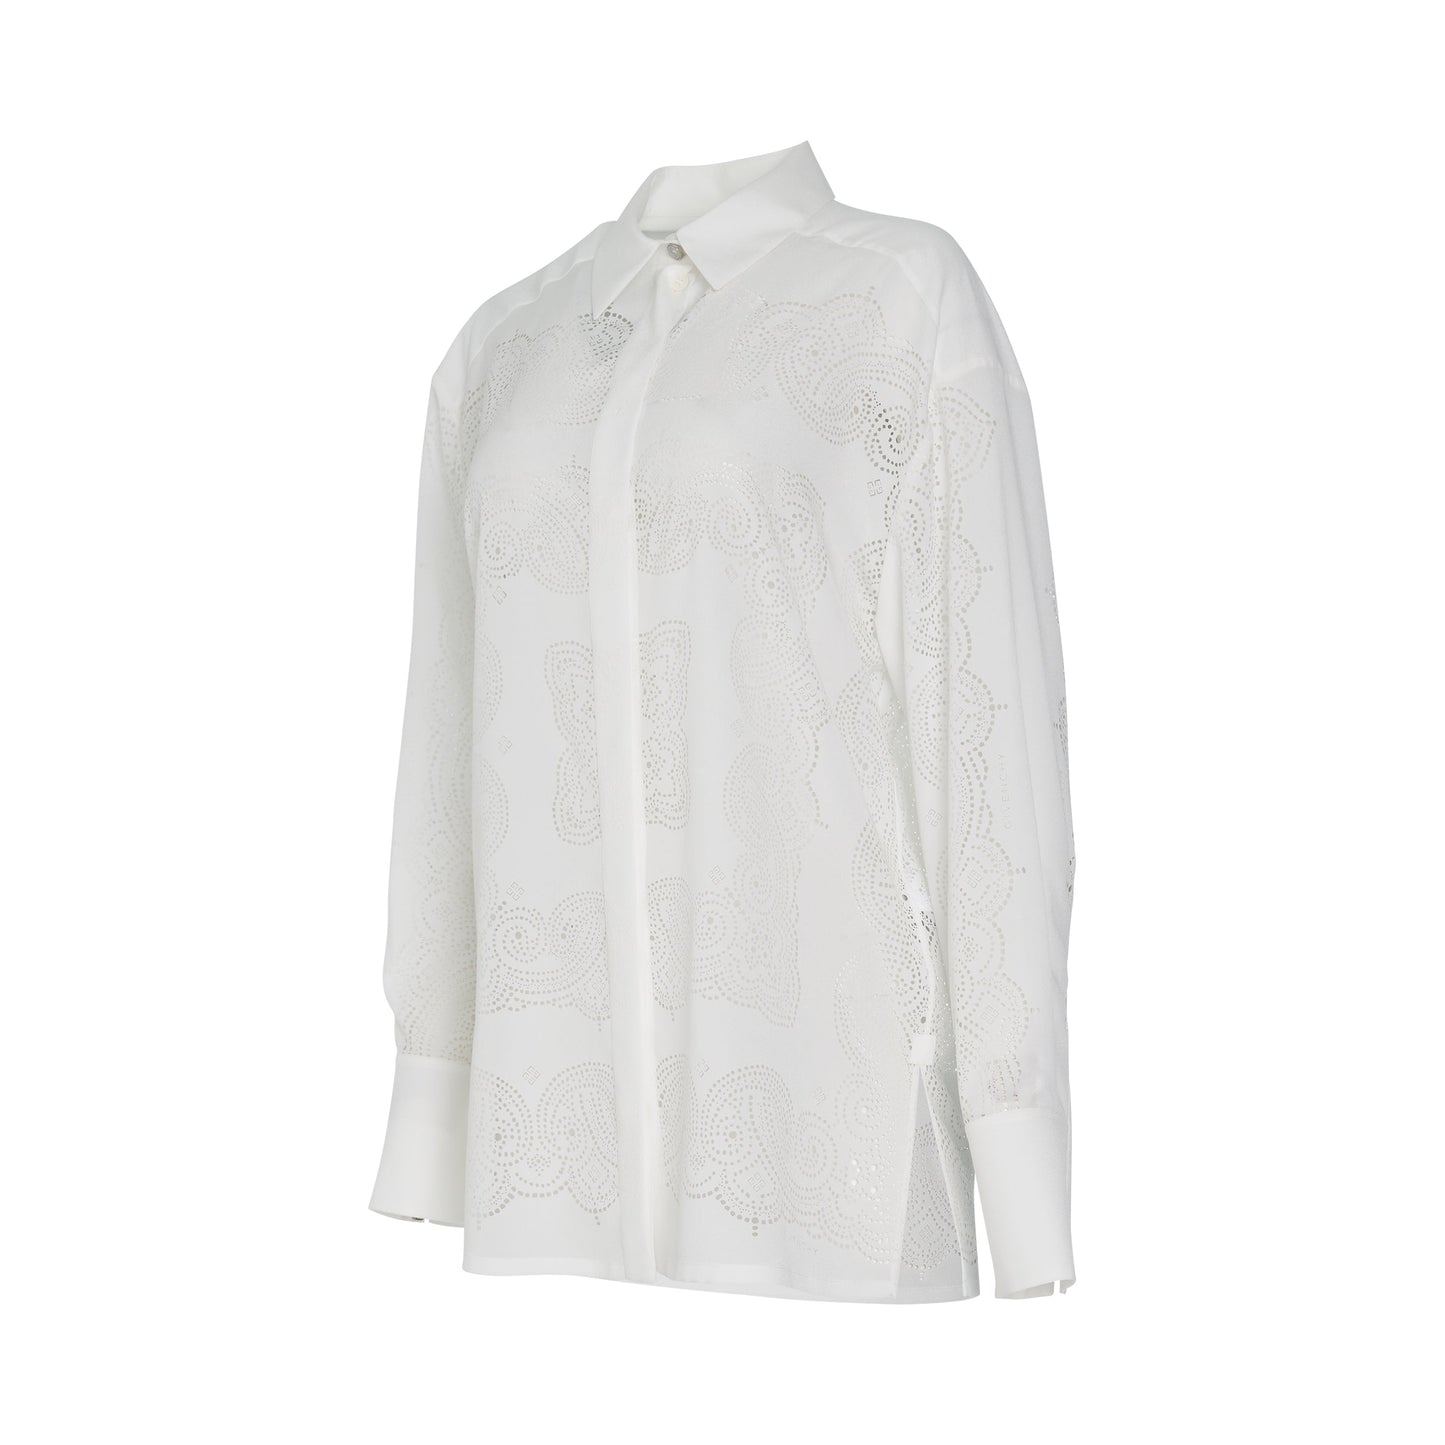 Bandana Shirt in White